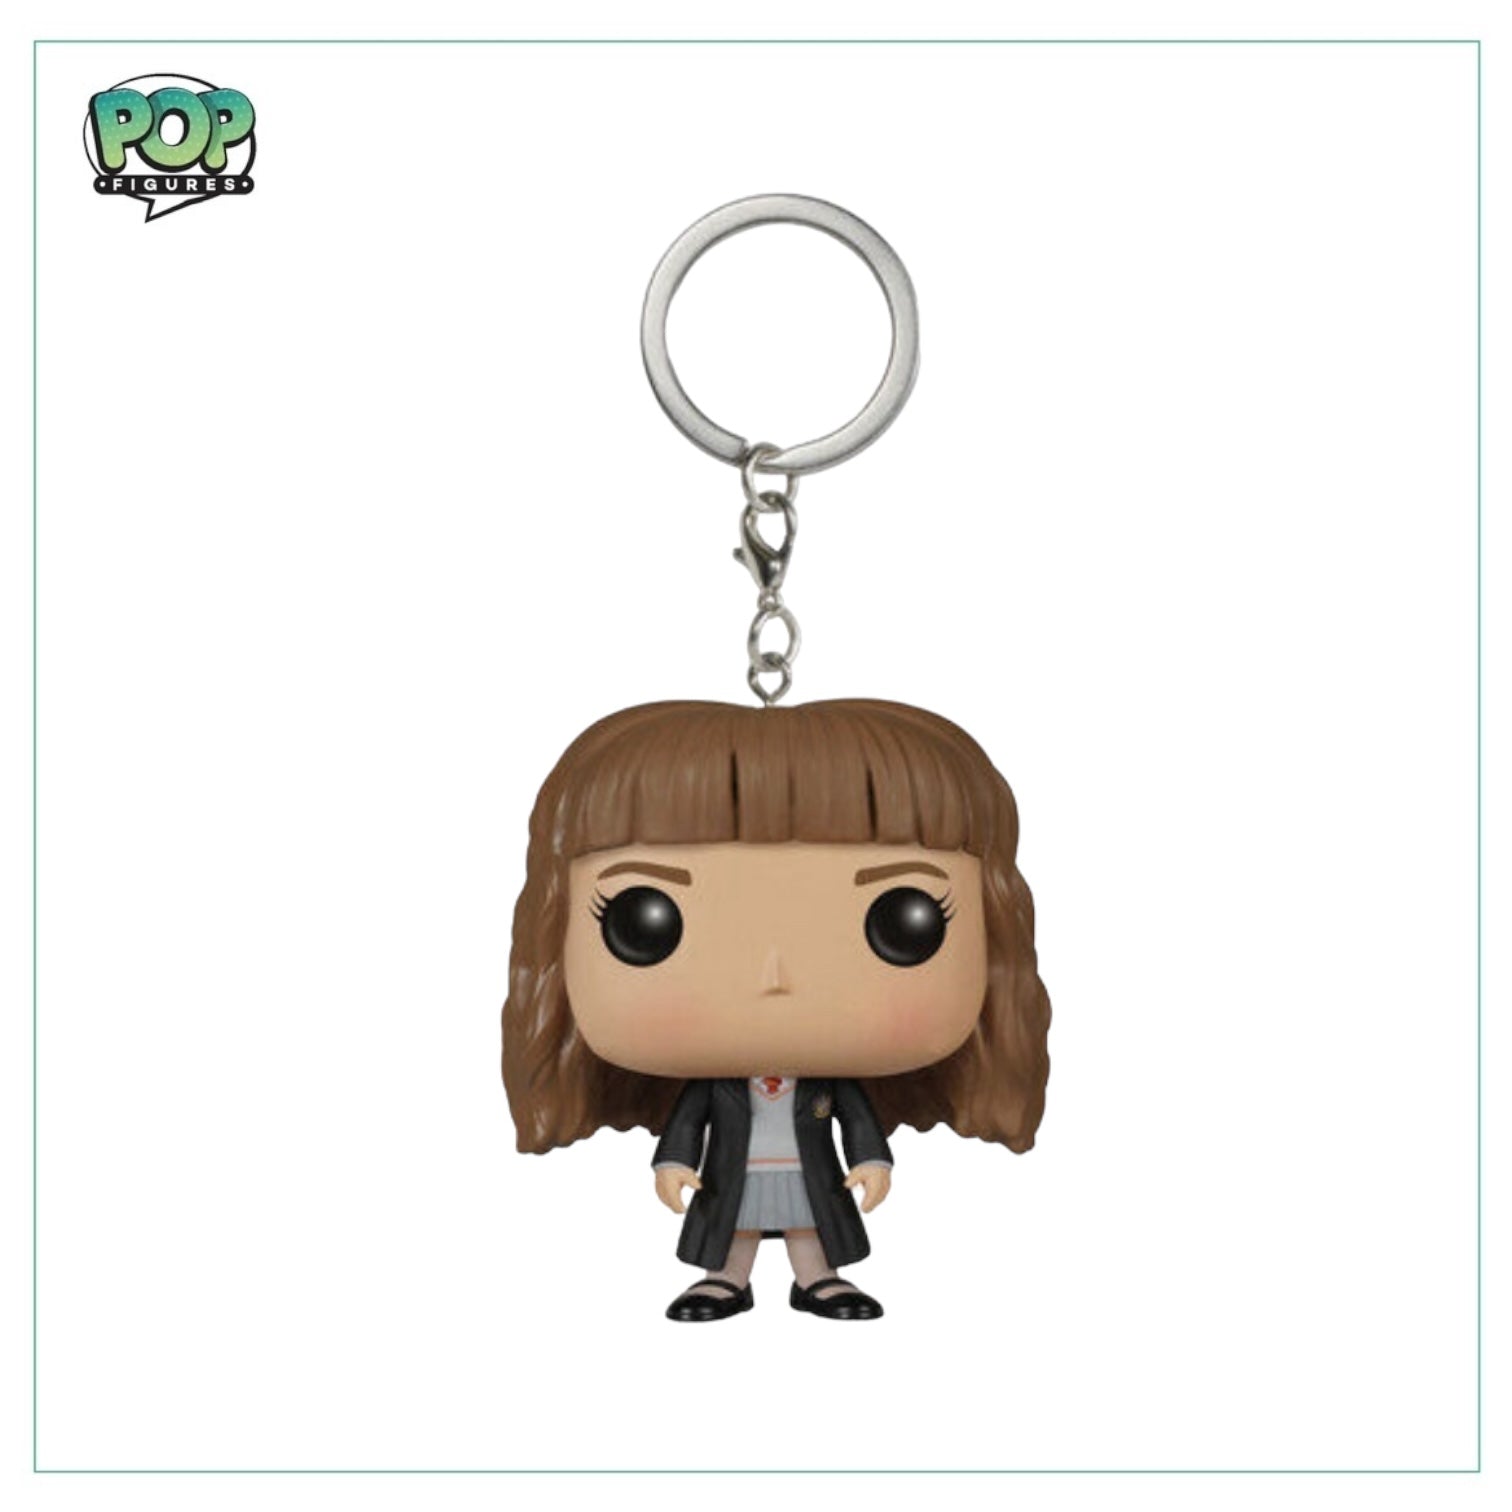 Hermione Granger - Pocket Pop! Keychain - Harry Potter